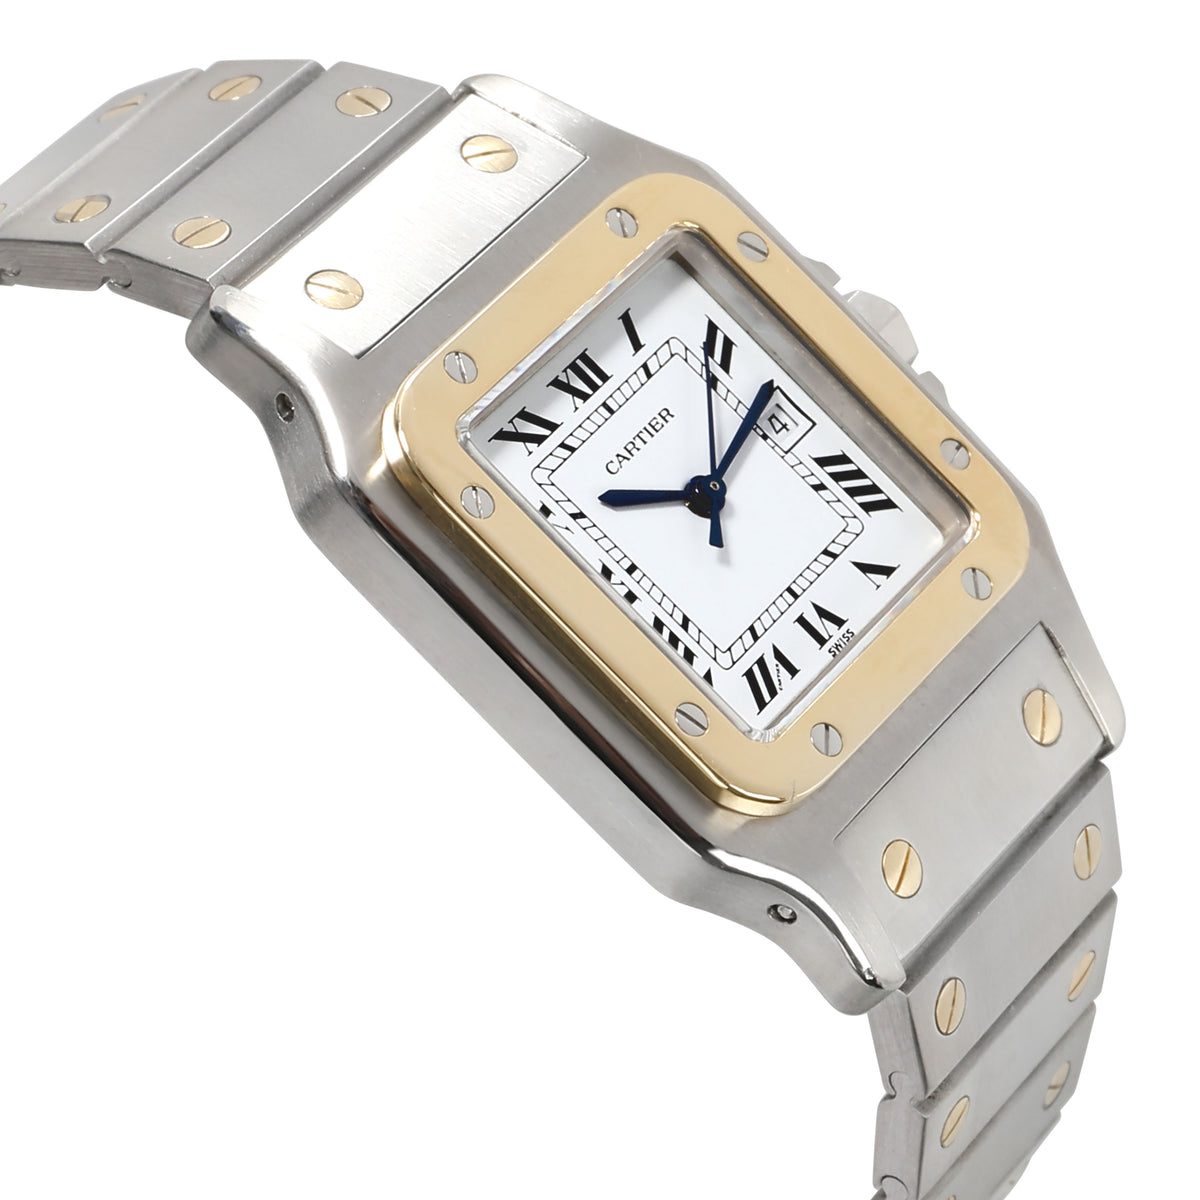 Cartier Santos 29612 Unisex Watch in 18kt Stainless Steel/Yellow Gold